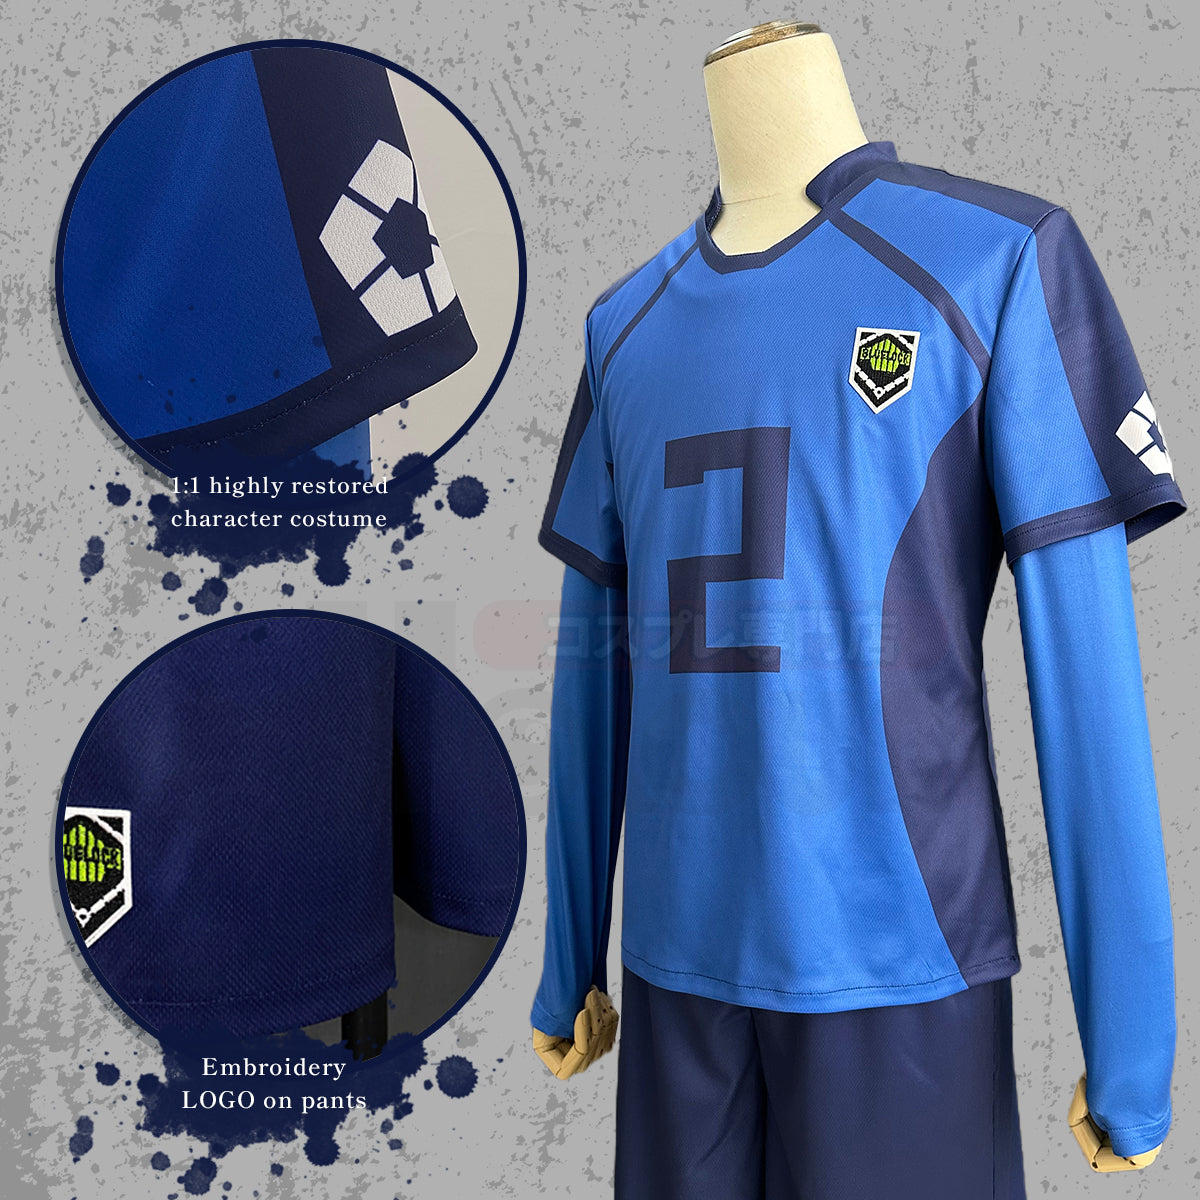 HOLOUN Blue Lock Anime Cosplay Costume No.2 Aryu T-shirt Shorts Socks Top Football Soccer Uniform Daily Sport Wearing